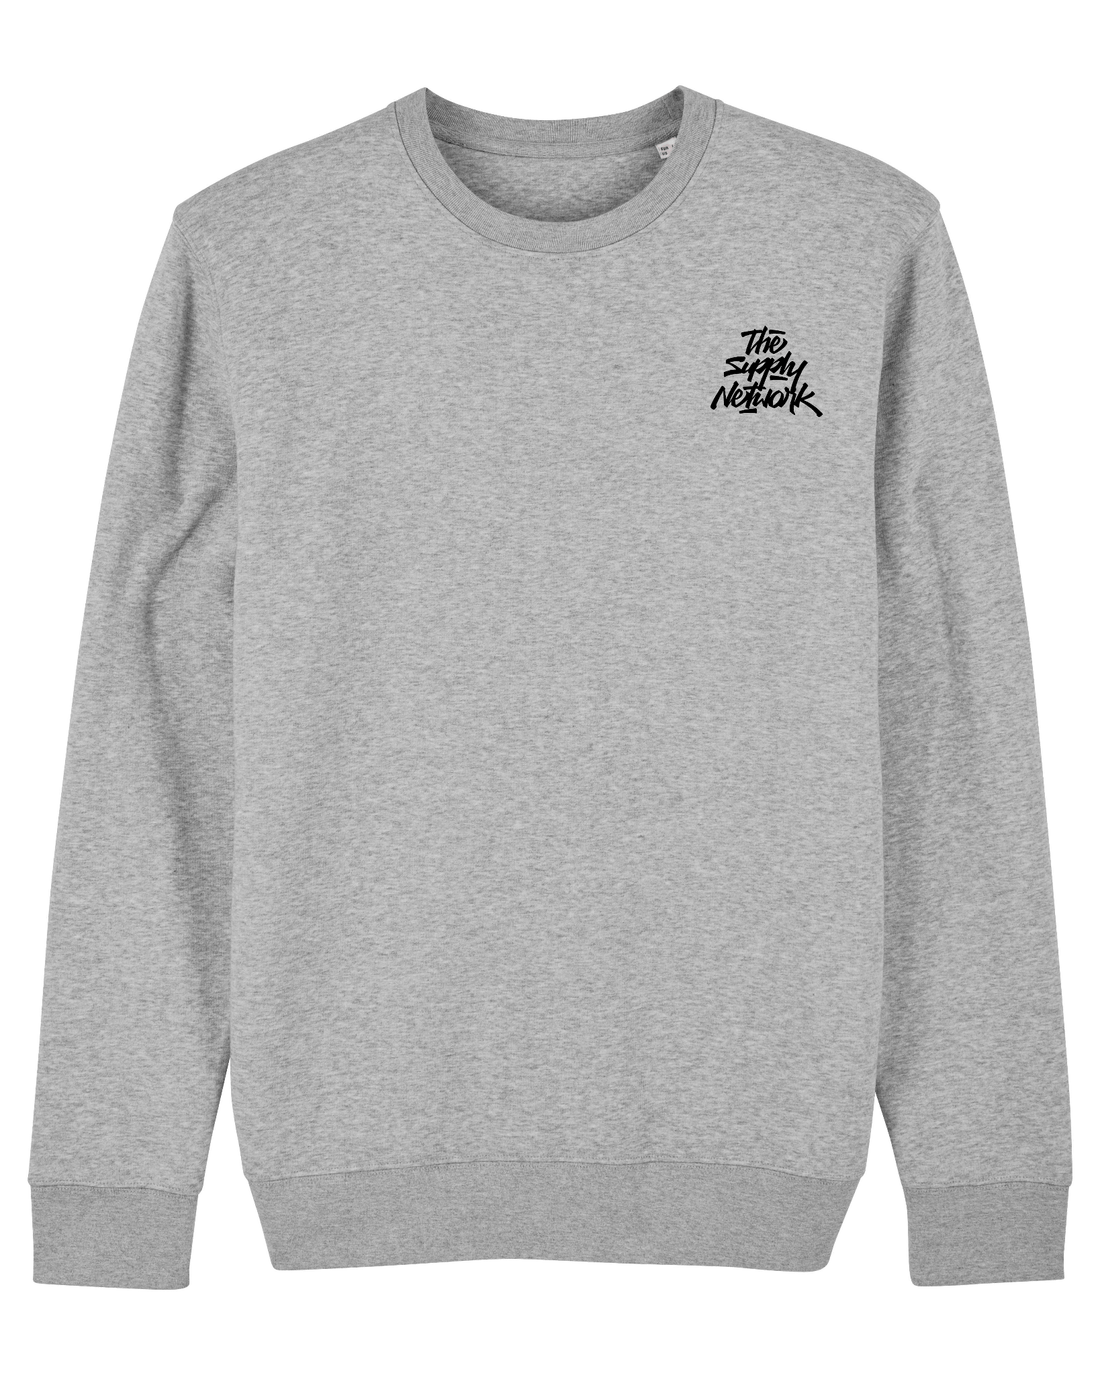 Grey Skater Sweatshirt, The Supply Network Front Print